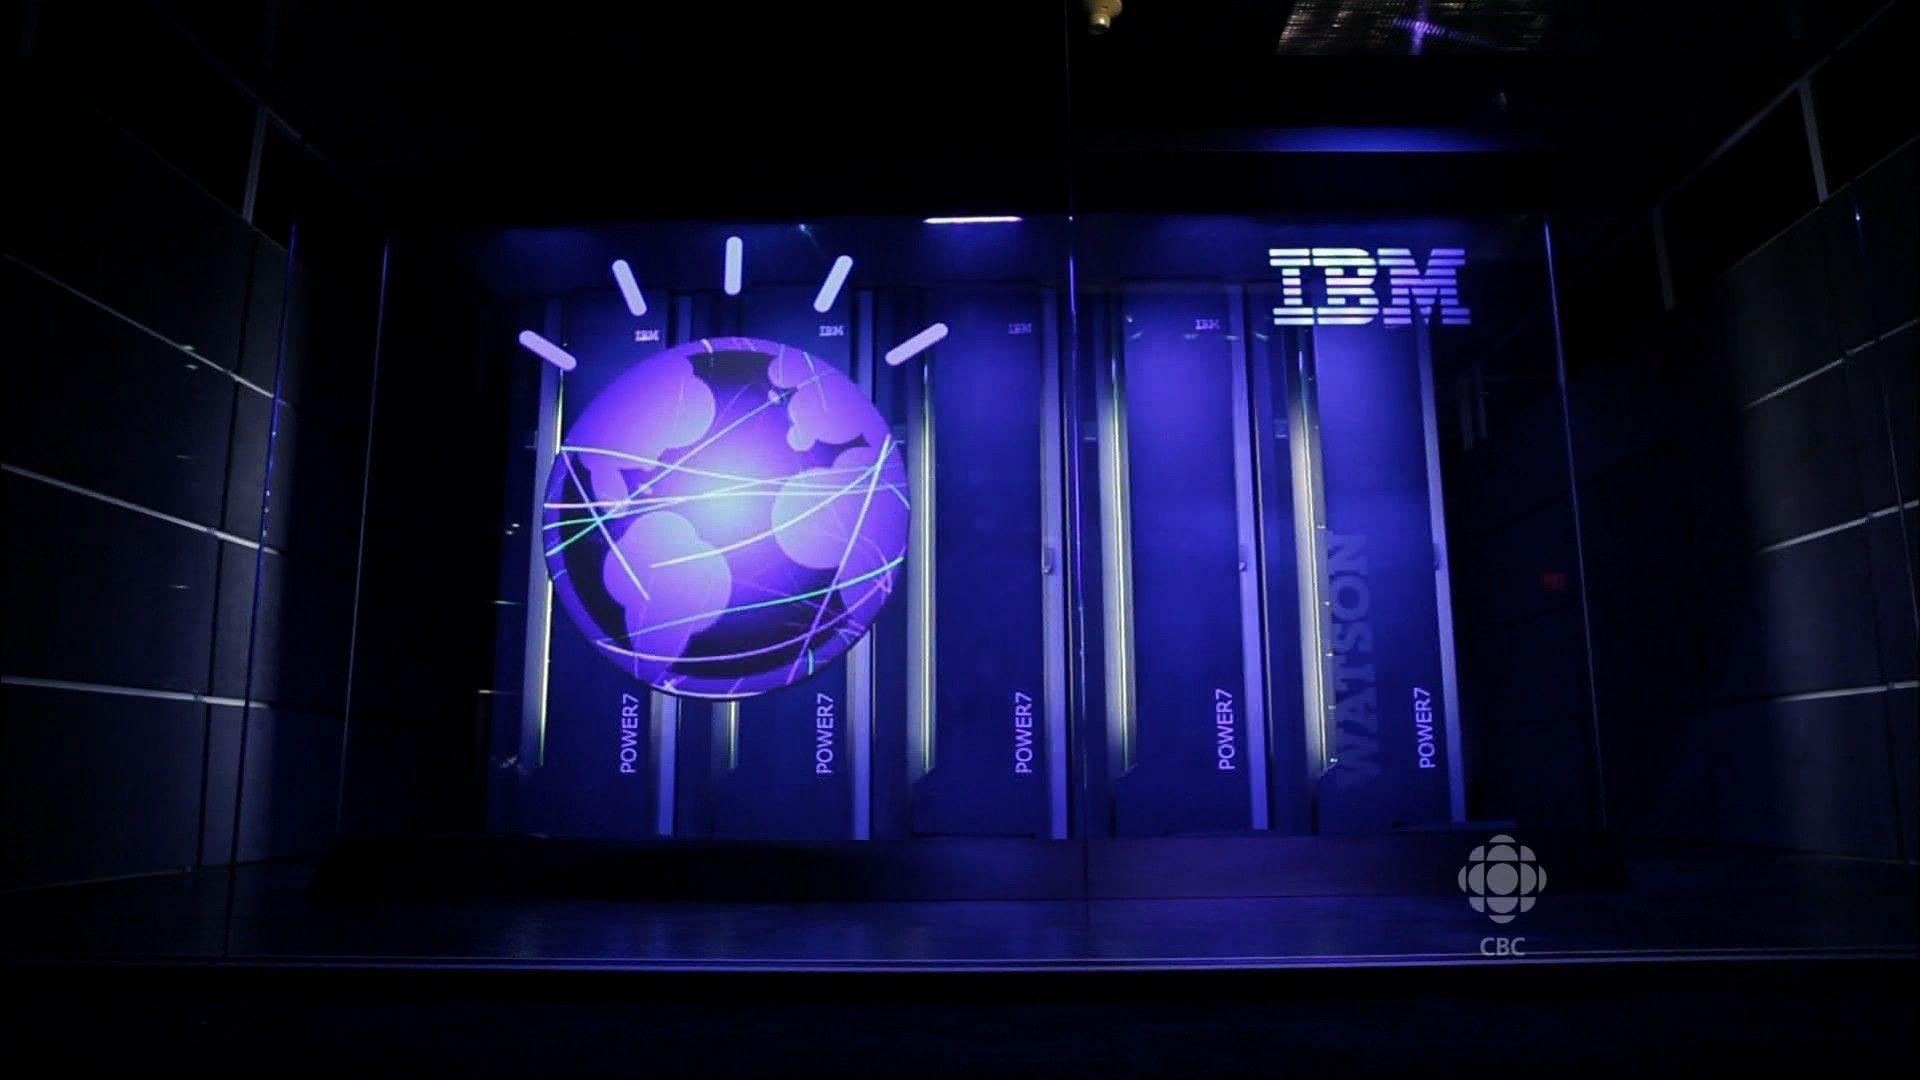 What If IBM Watson Were To Team Up With LinkedIn Lynda.com? [Christian]